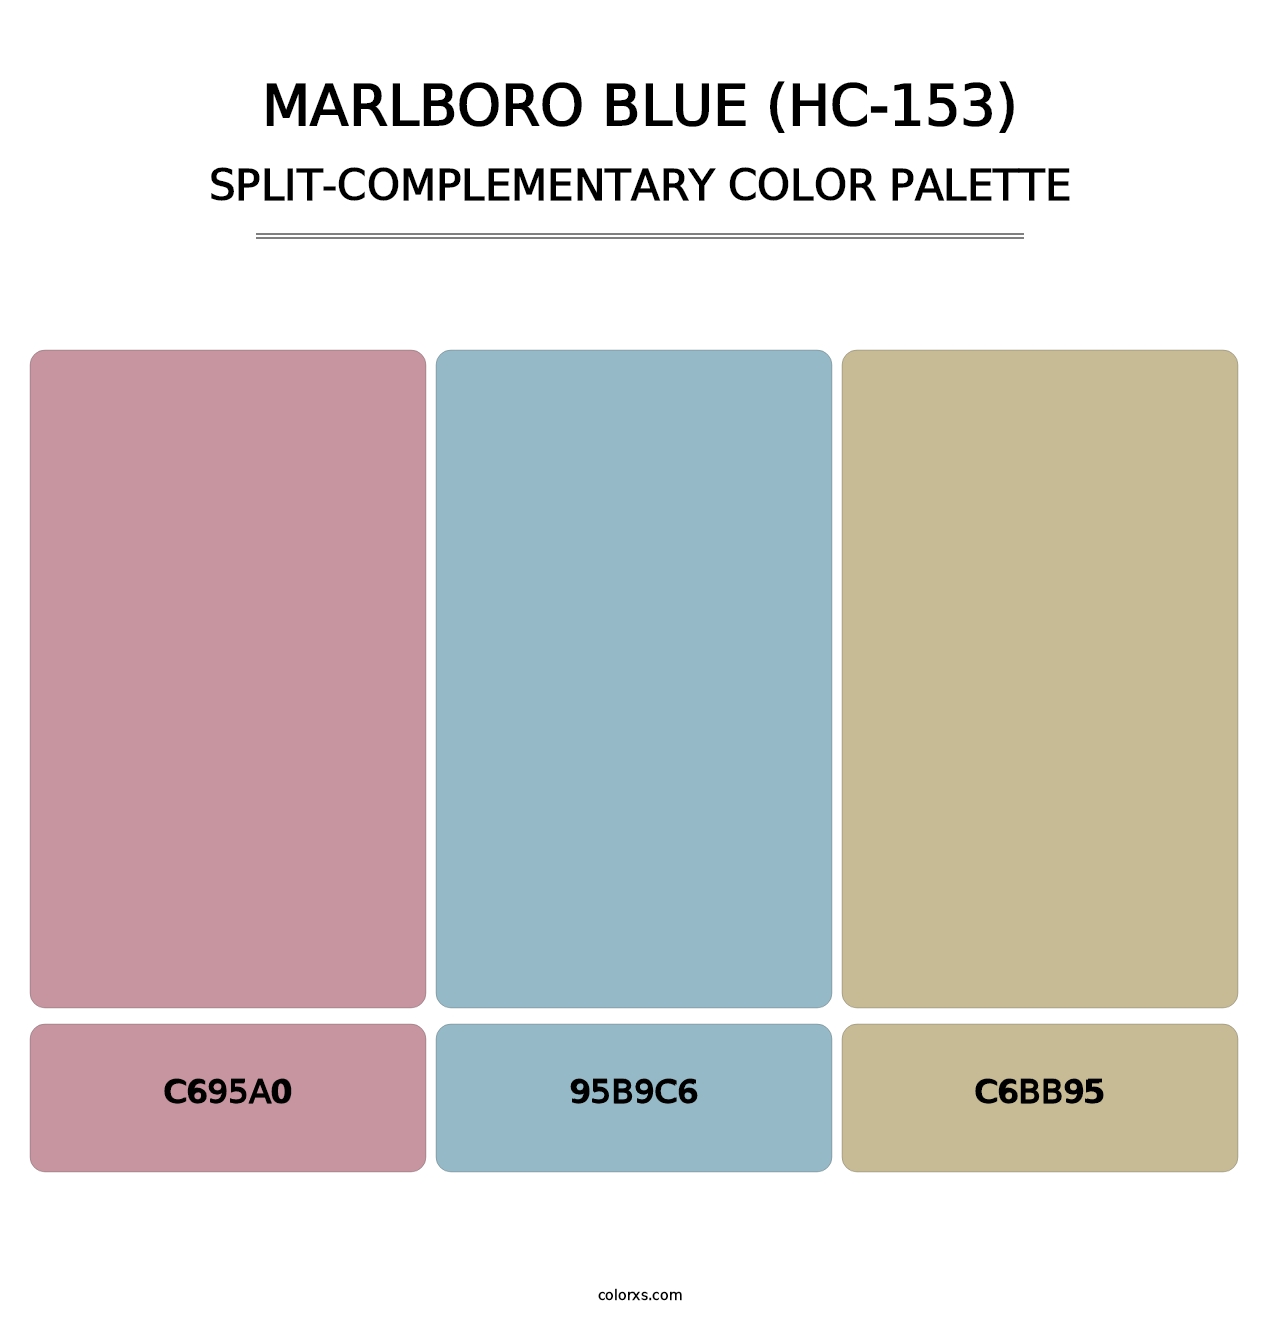 Marlboro Blue (HC-153) - Split-Complementary Color Palette